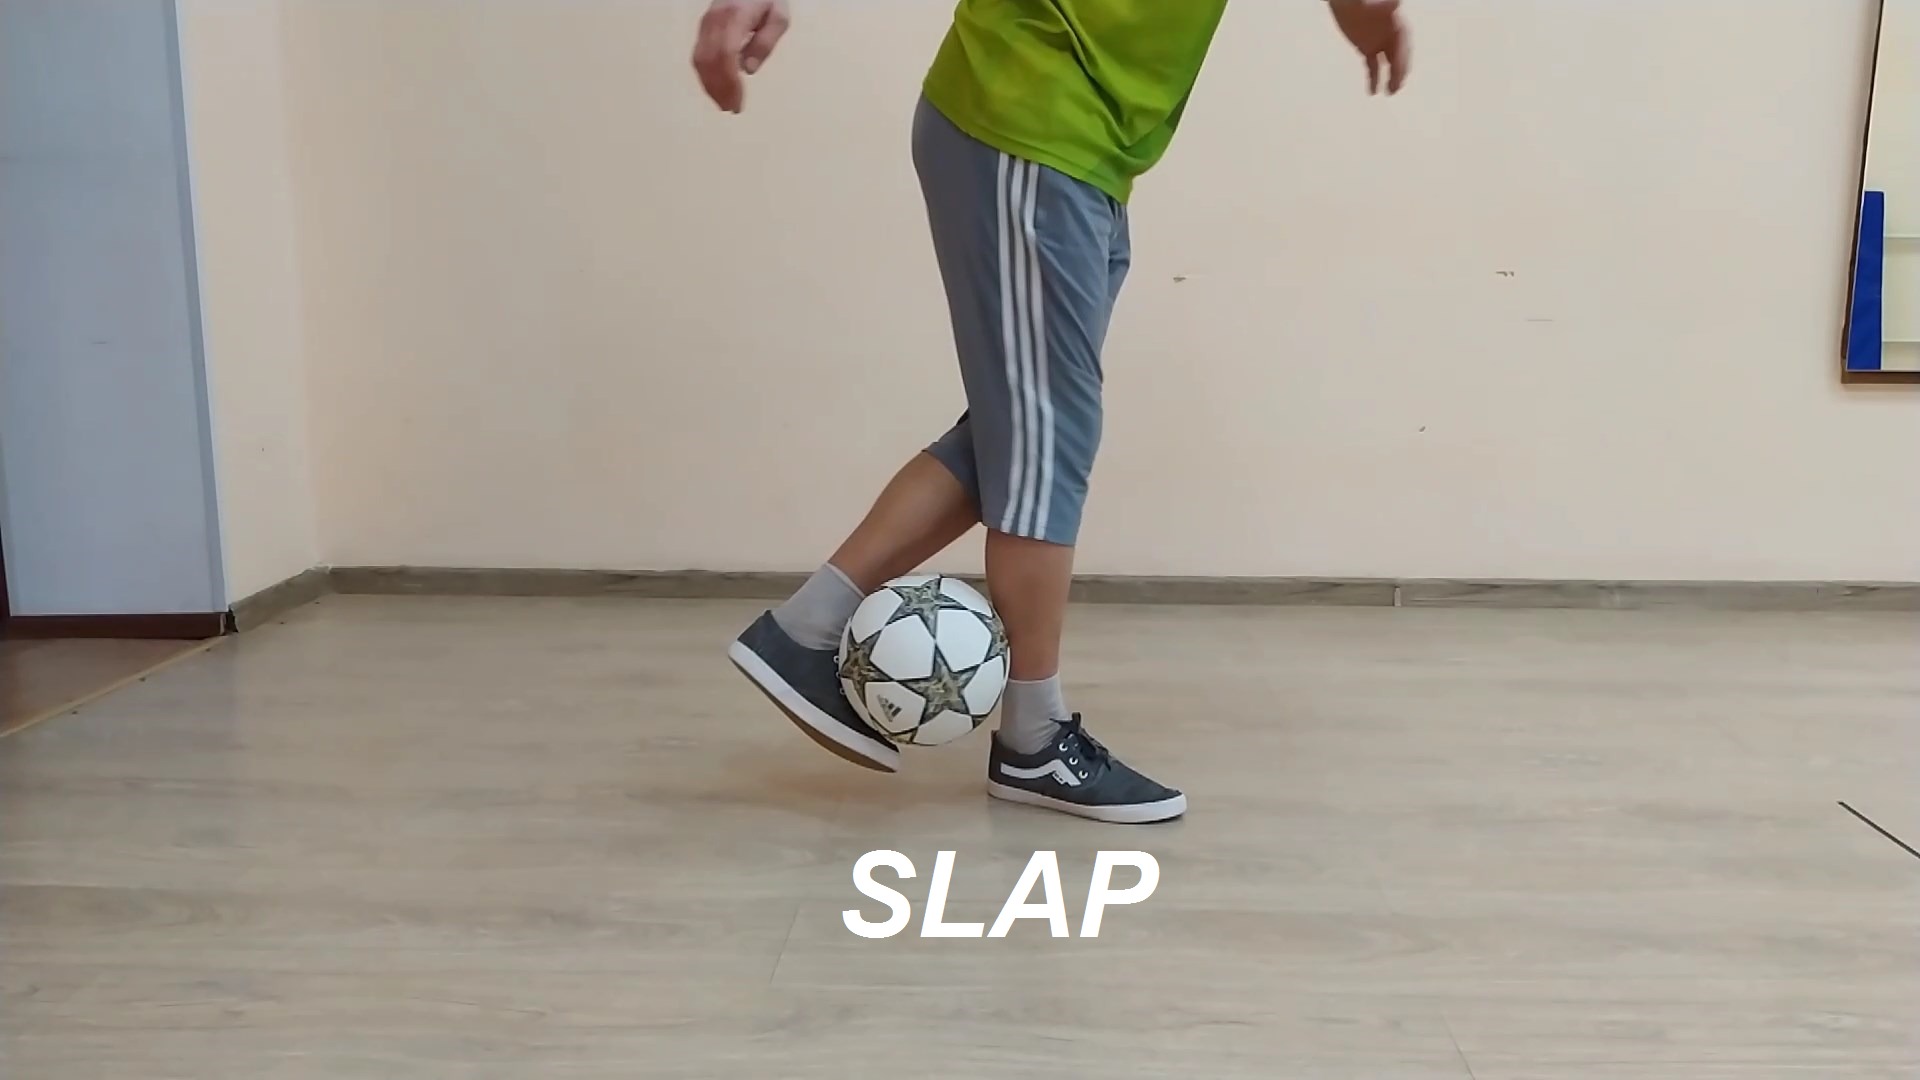 Slap balls